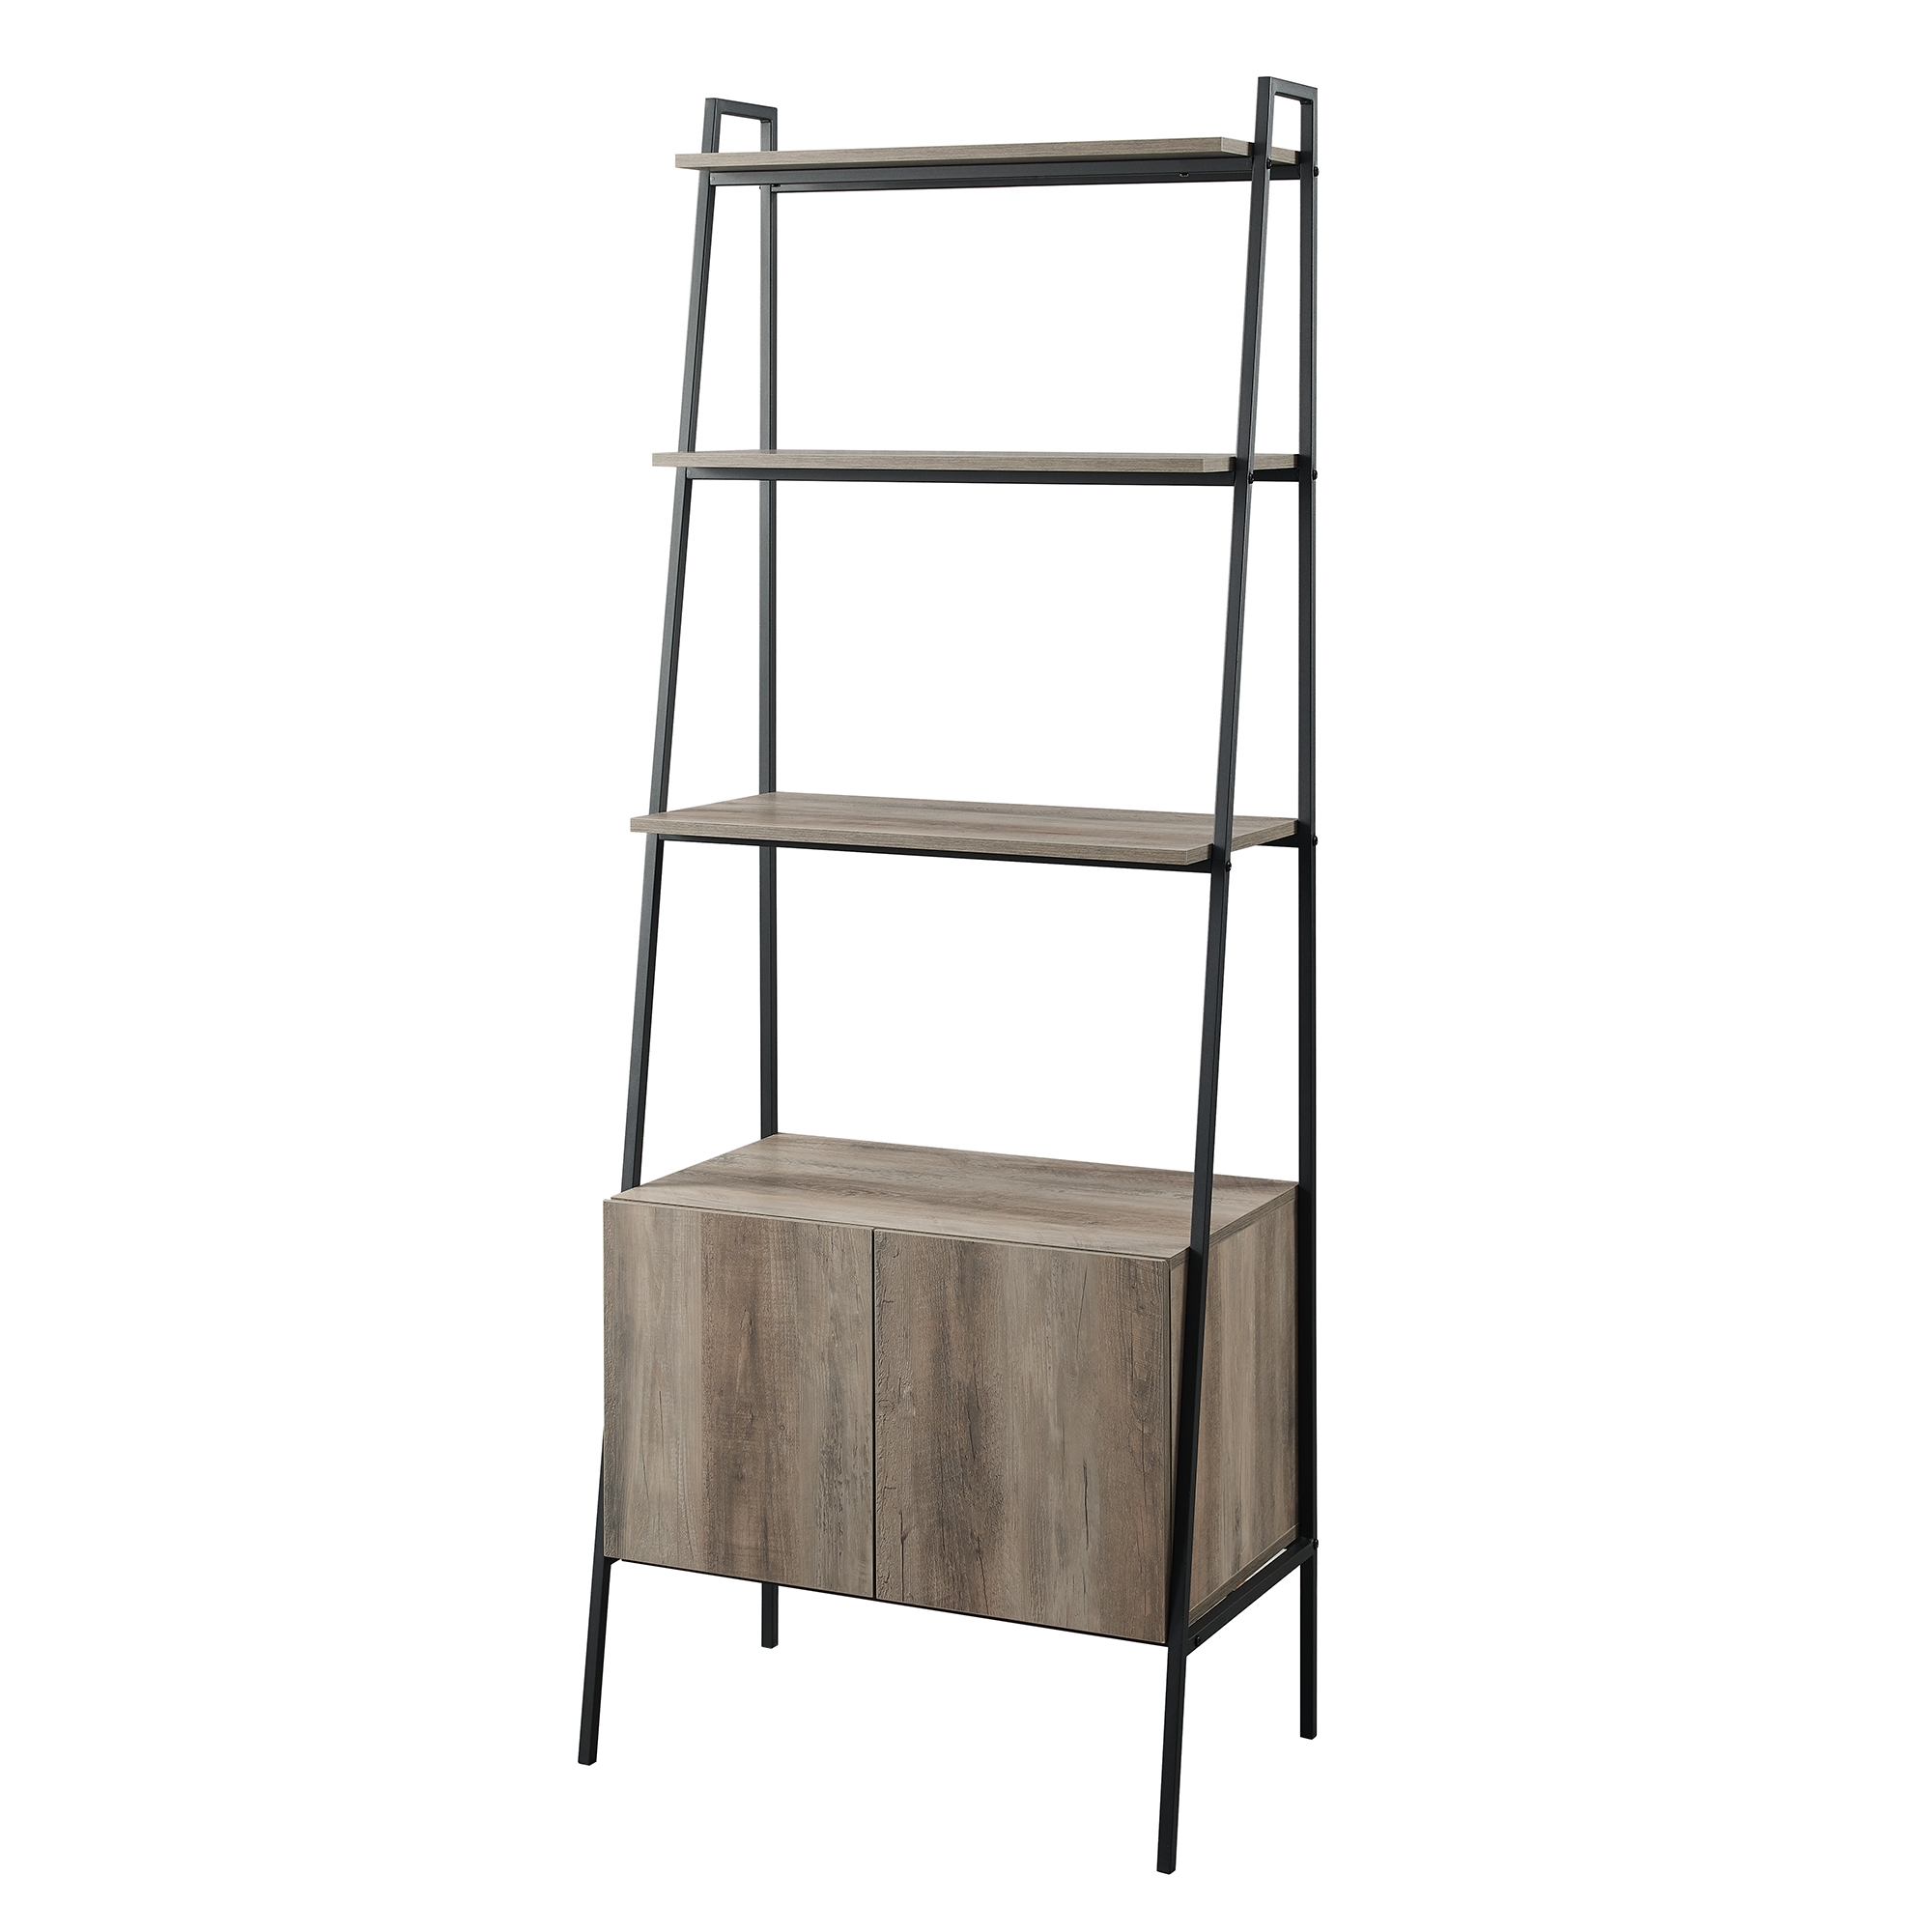 Arlo 72" Industrial Modern Ladder Shelf with Cabinet - Grey Wash - Image 3